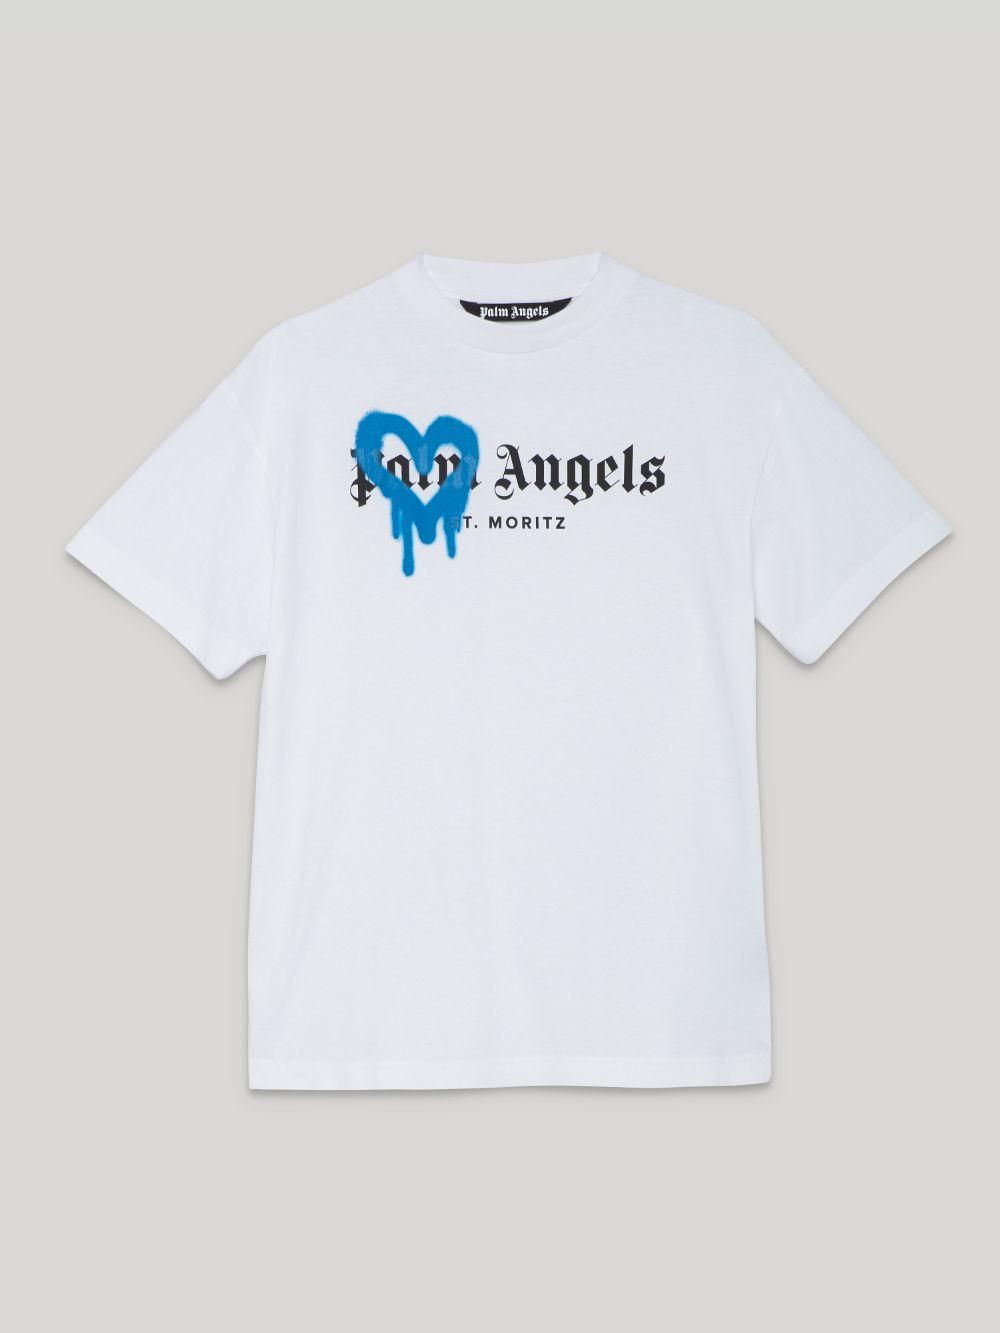 https://cdna.lystit.com/photos/baltini/5728a856/palm-angels-White-T-shirts-And-Polos-White.jpeg